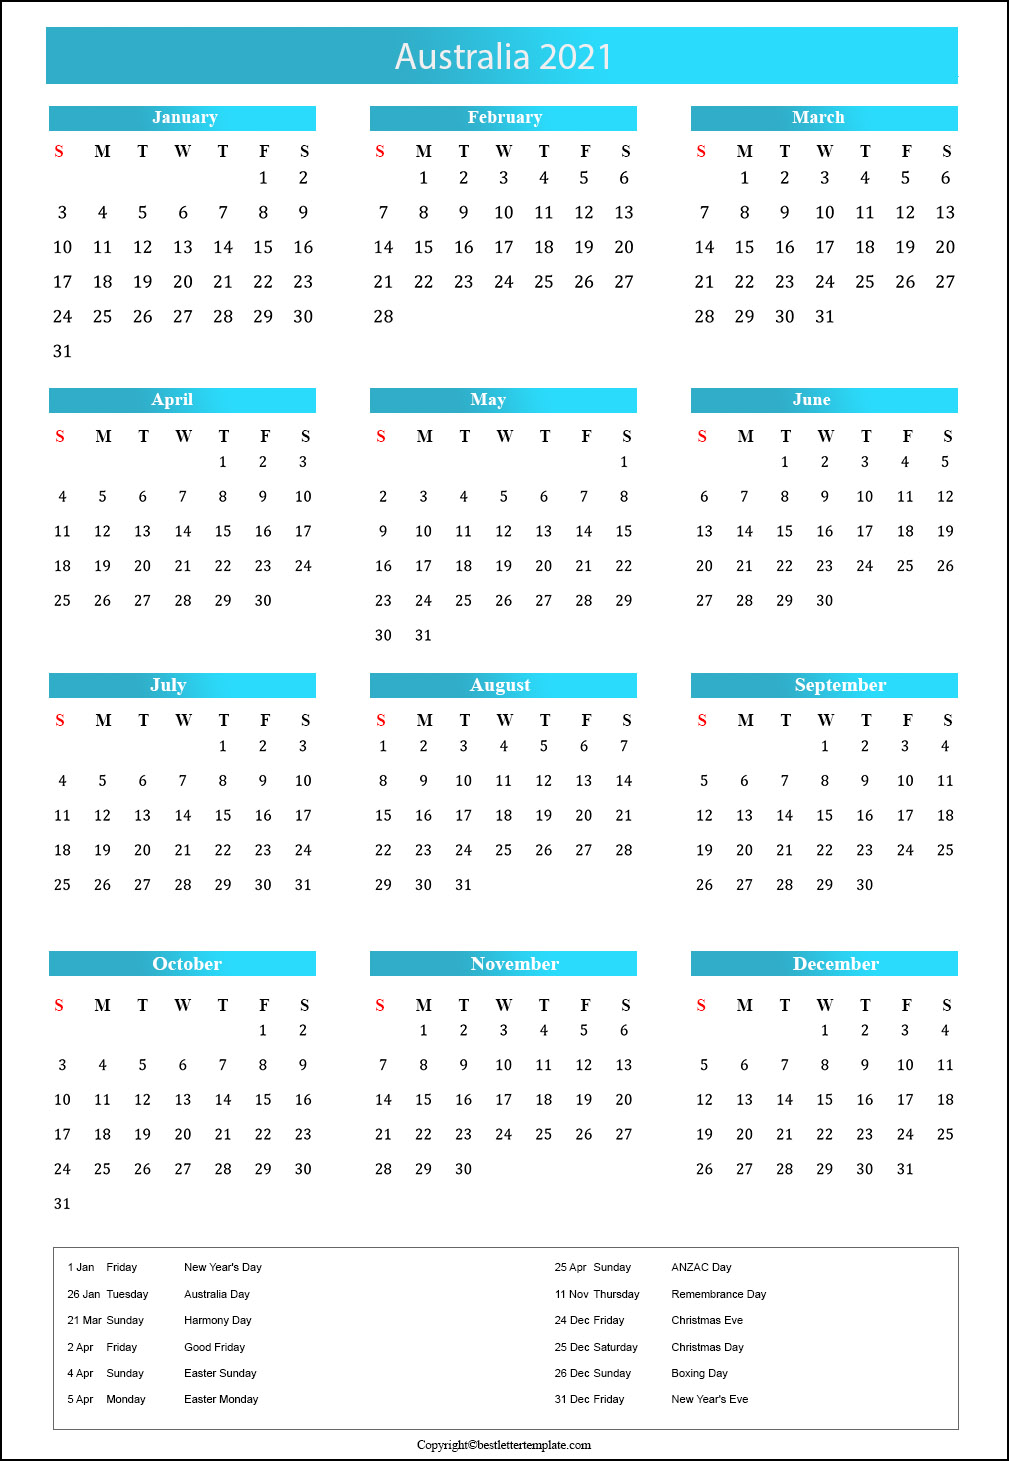 Free Printable Australia Calendar 2021 with Public Holidays